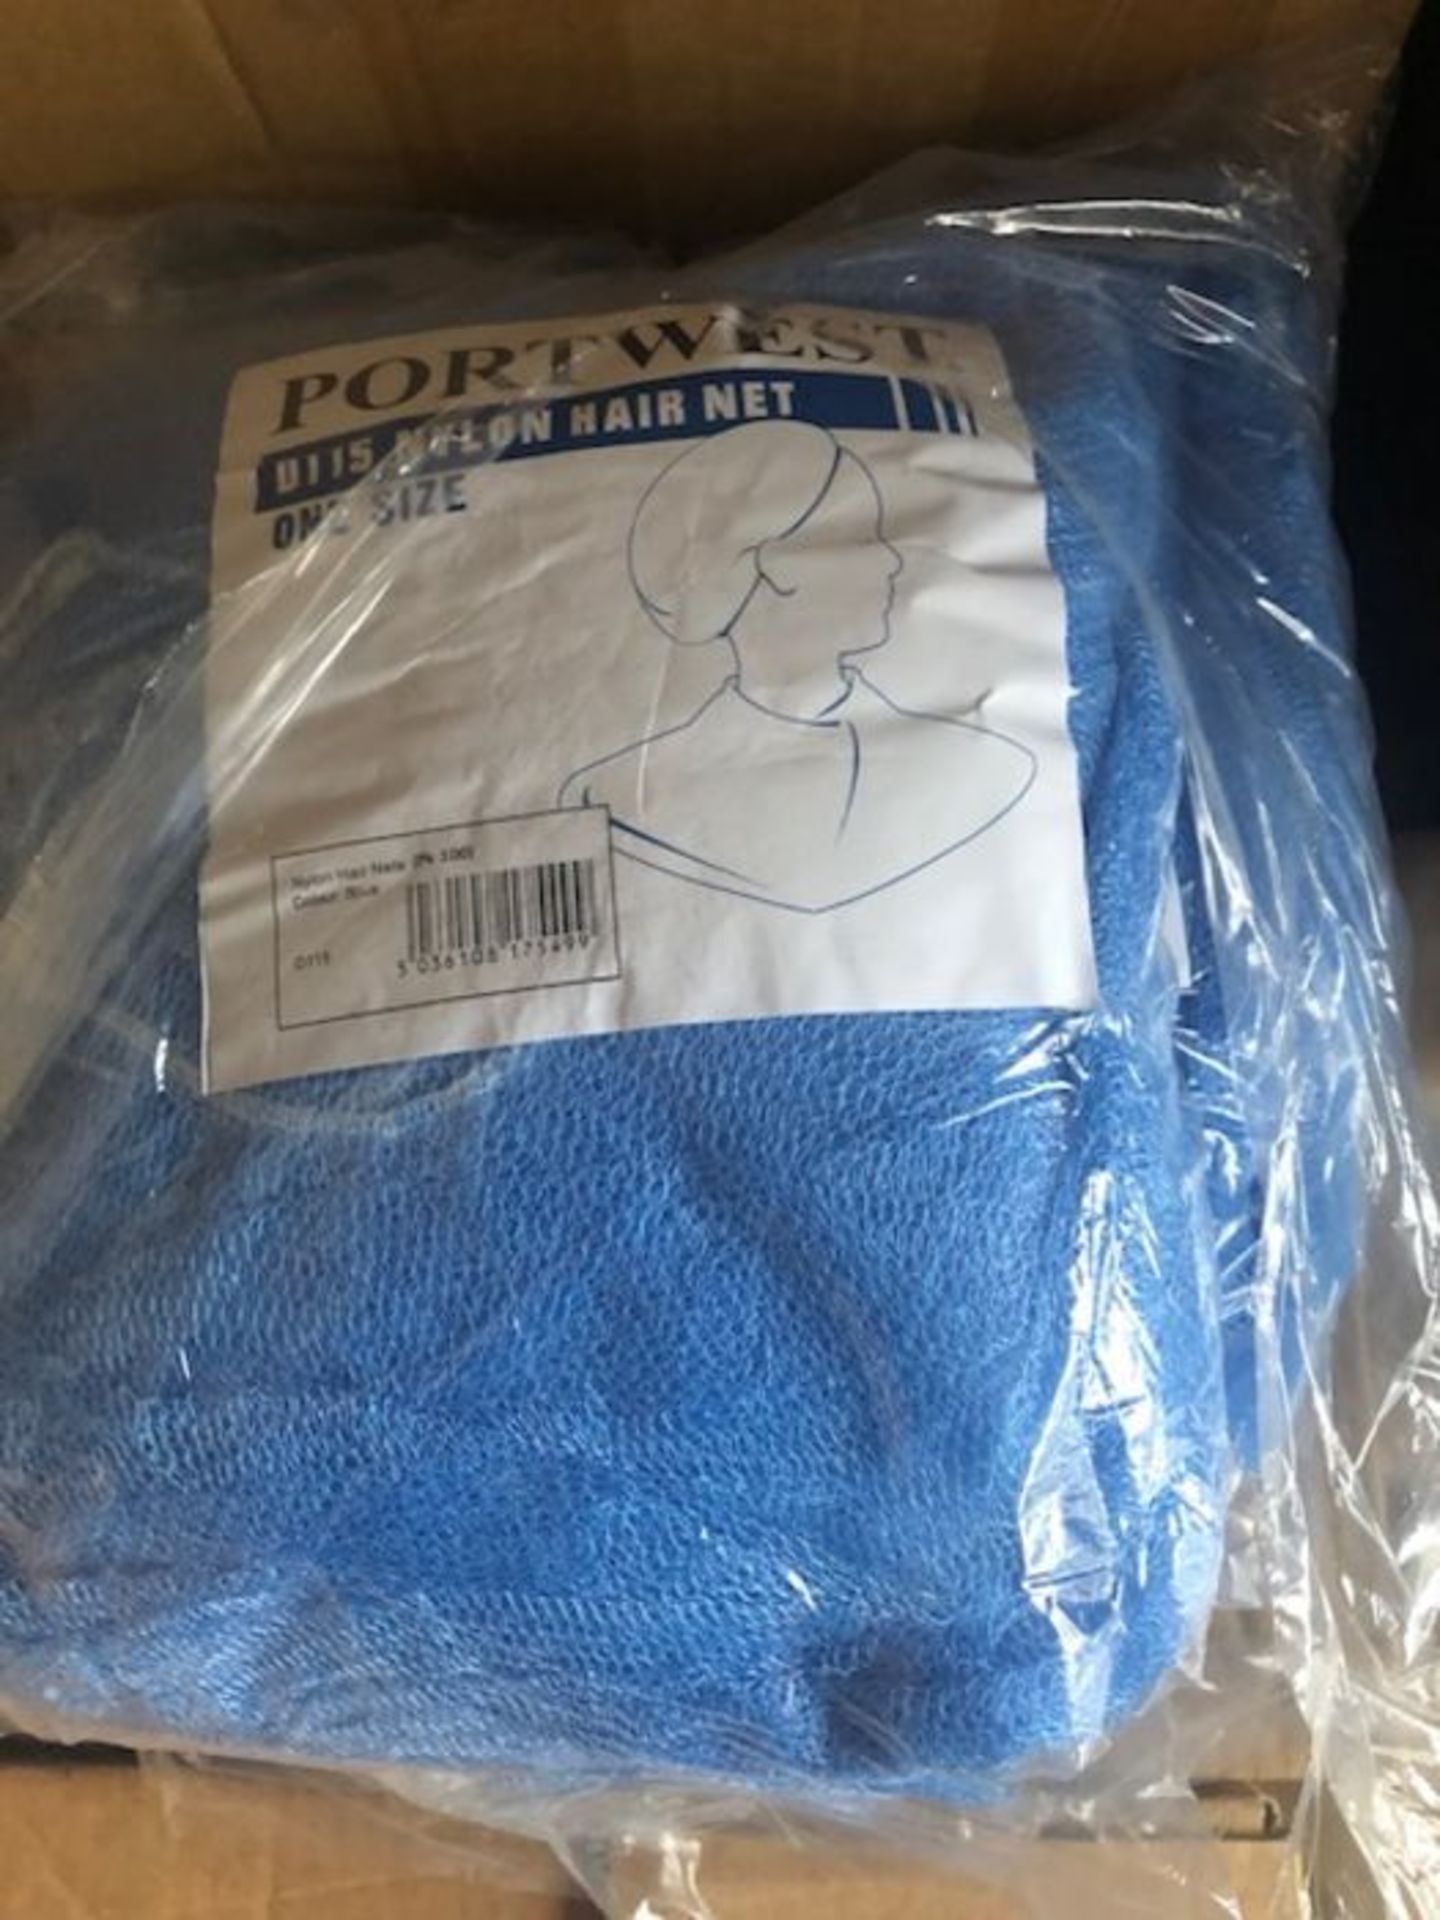 Box of 10,000 x Portwest D115 Nylon Disposable Hairnet - H9R 2000150939 - Image 2 of 6